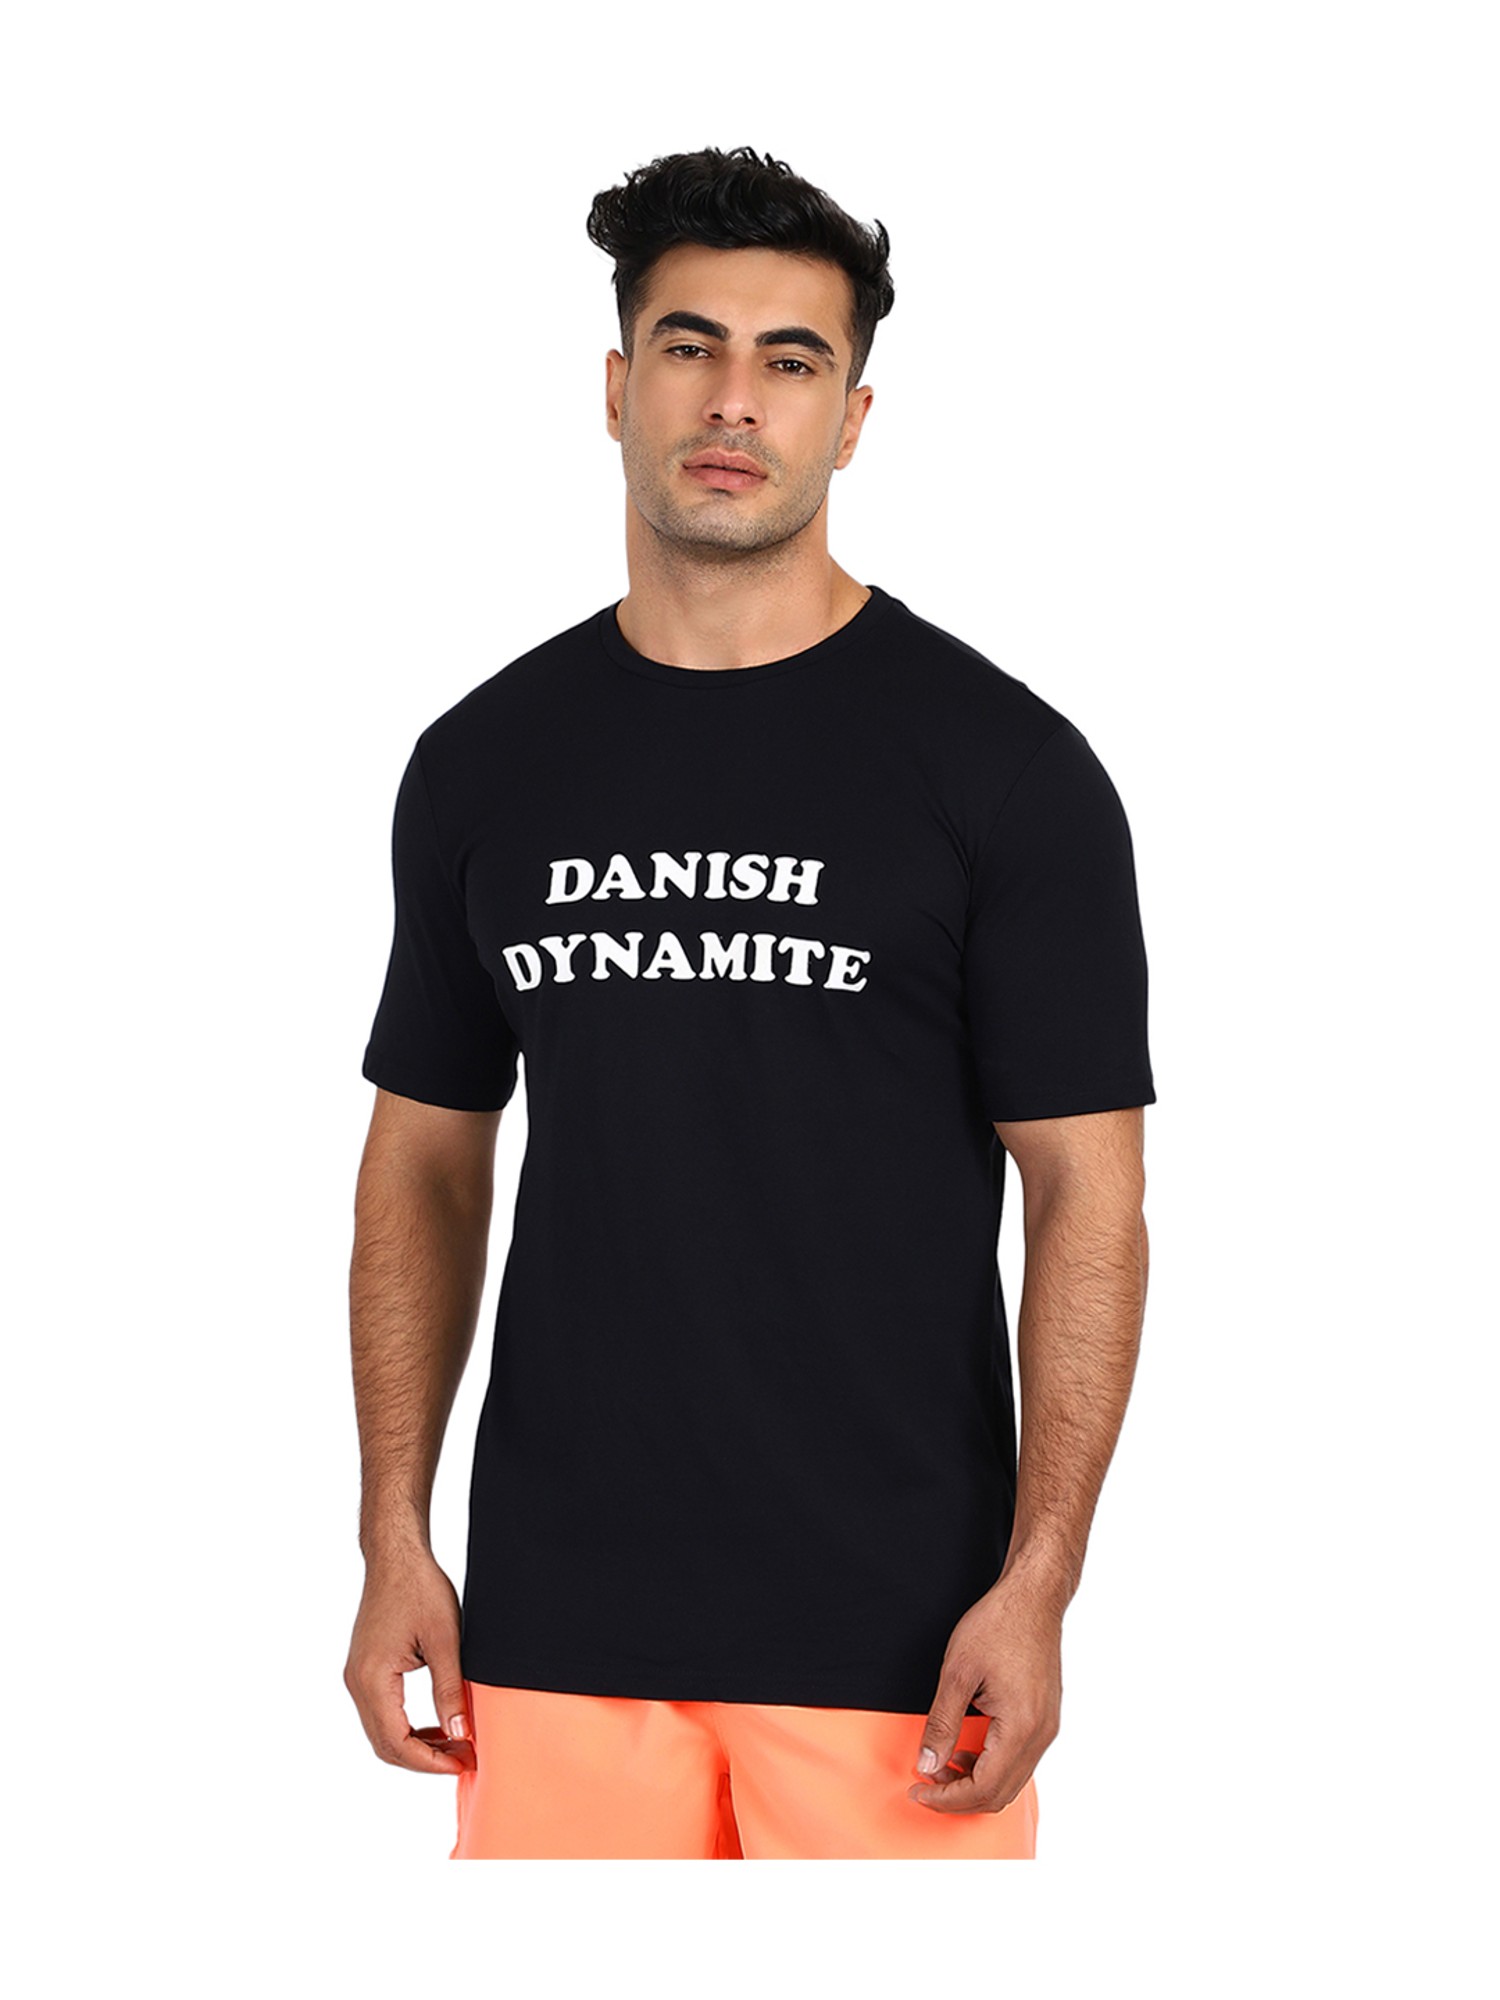 Hummel Black Short Sleeves Printed T-Shirt for Men Online @ Tata CLiQ